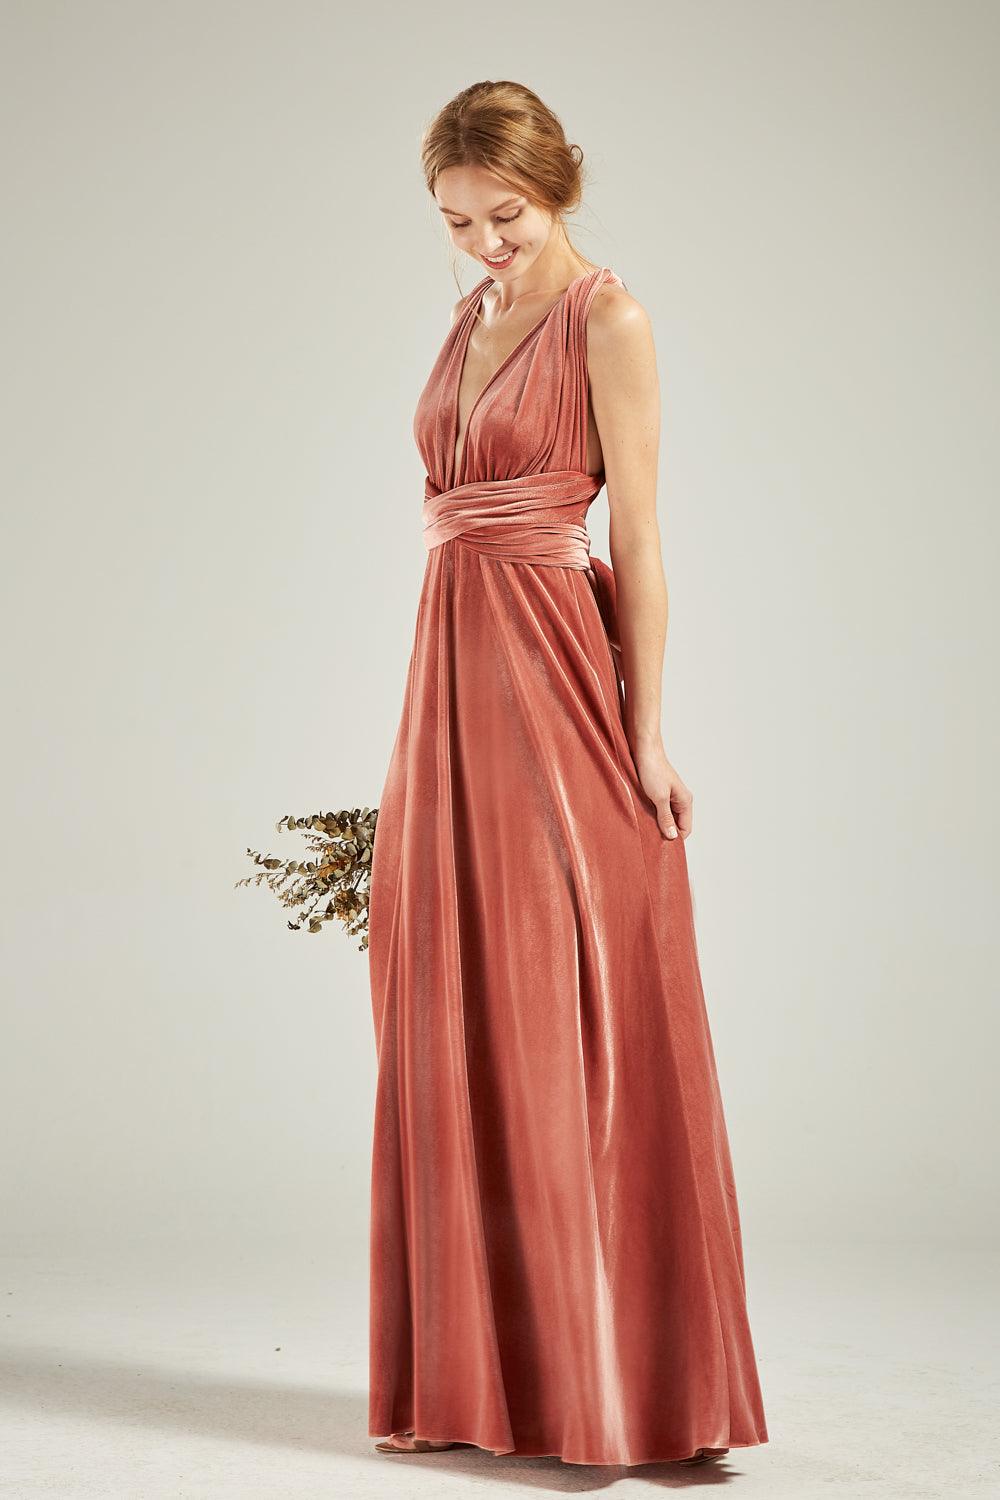 Mia Rose Gold Satin Dress